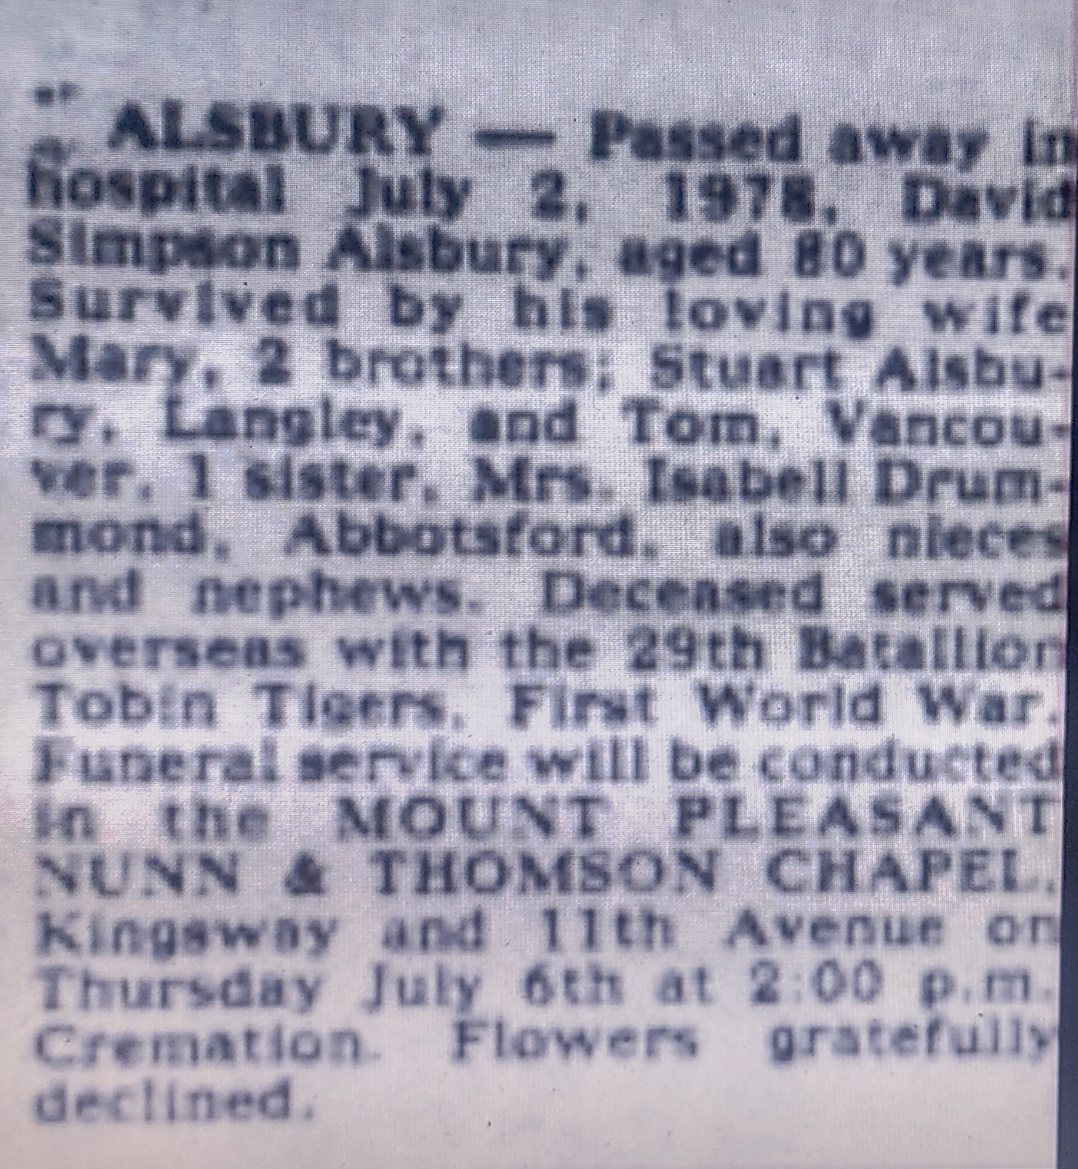 David Simpson Alsbury obituary 